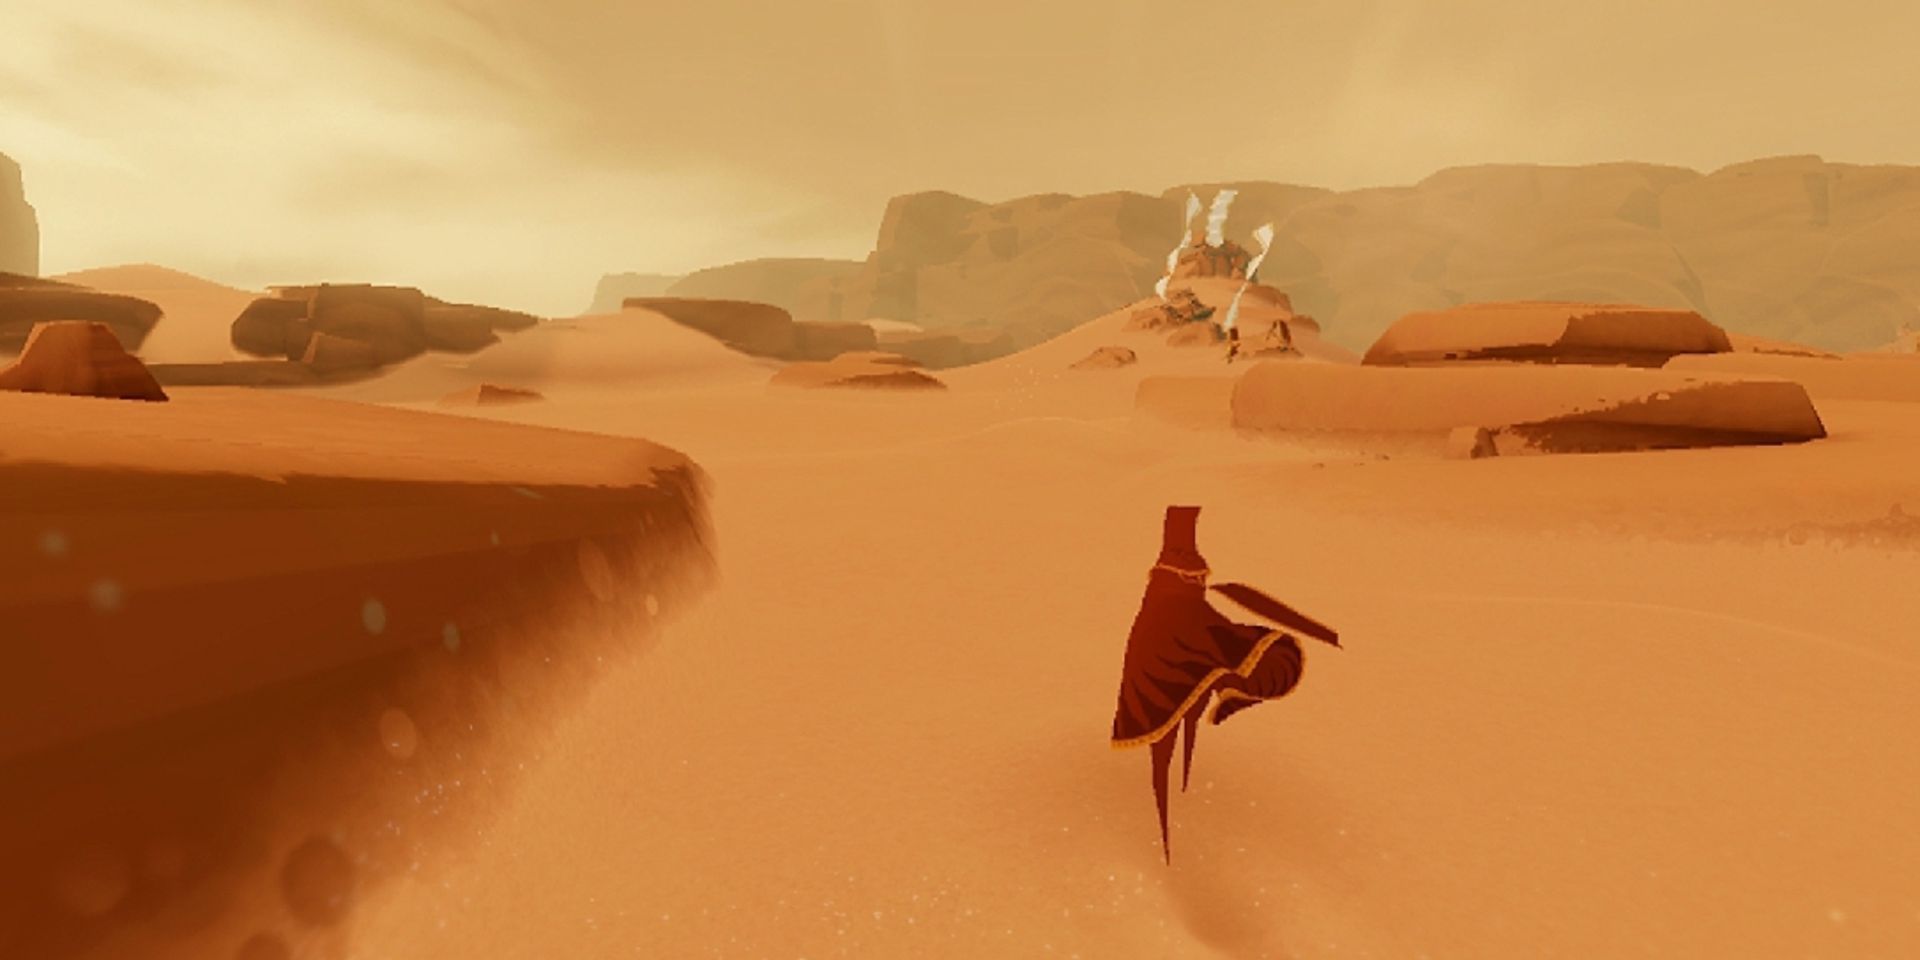 Player travels the desert